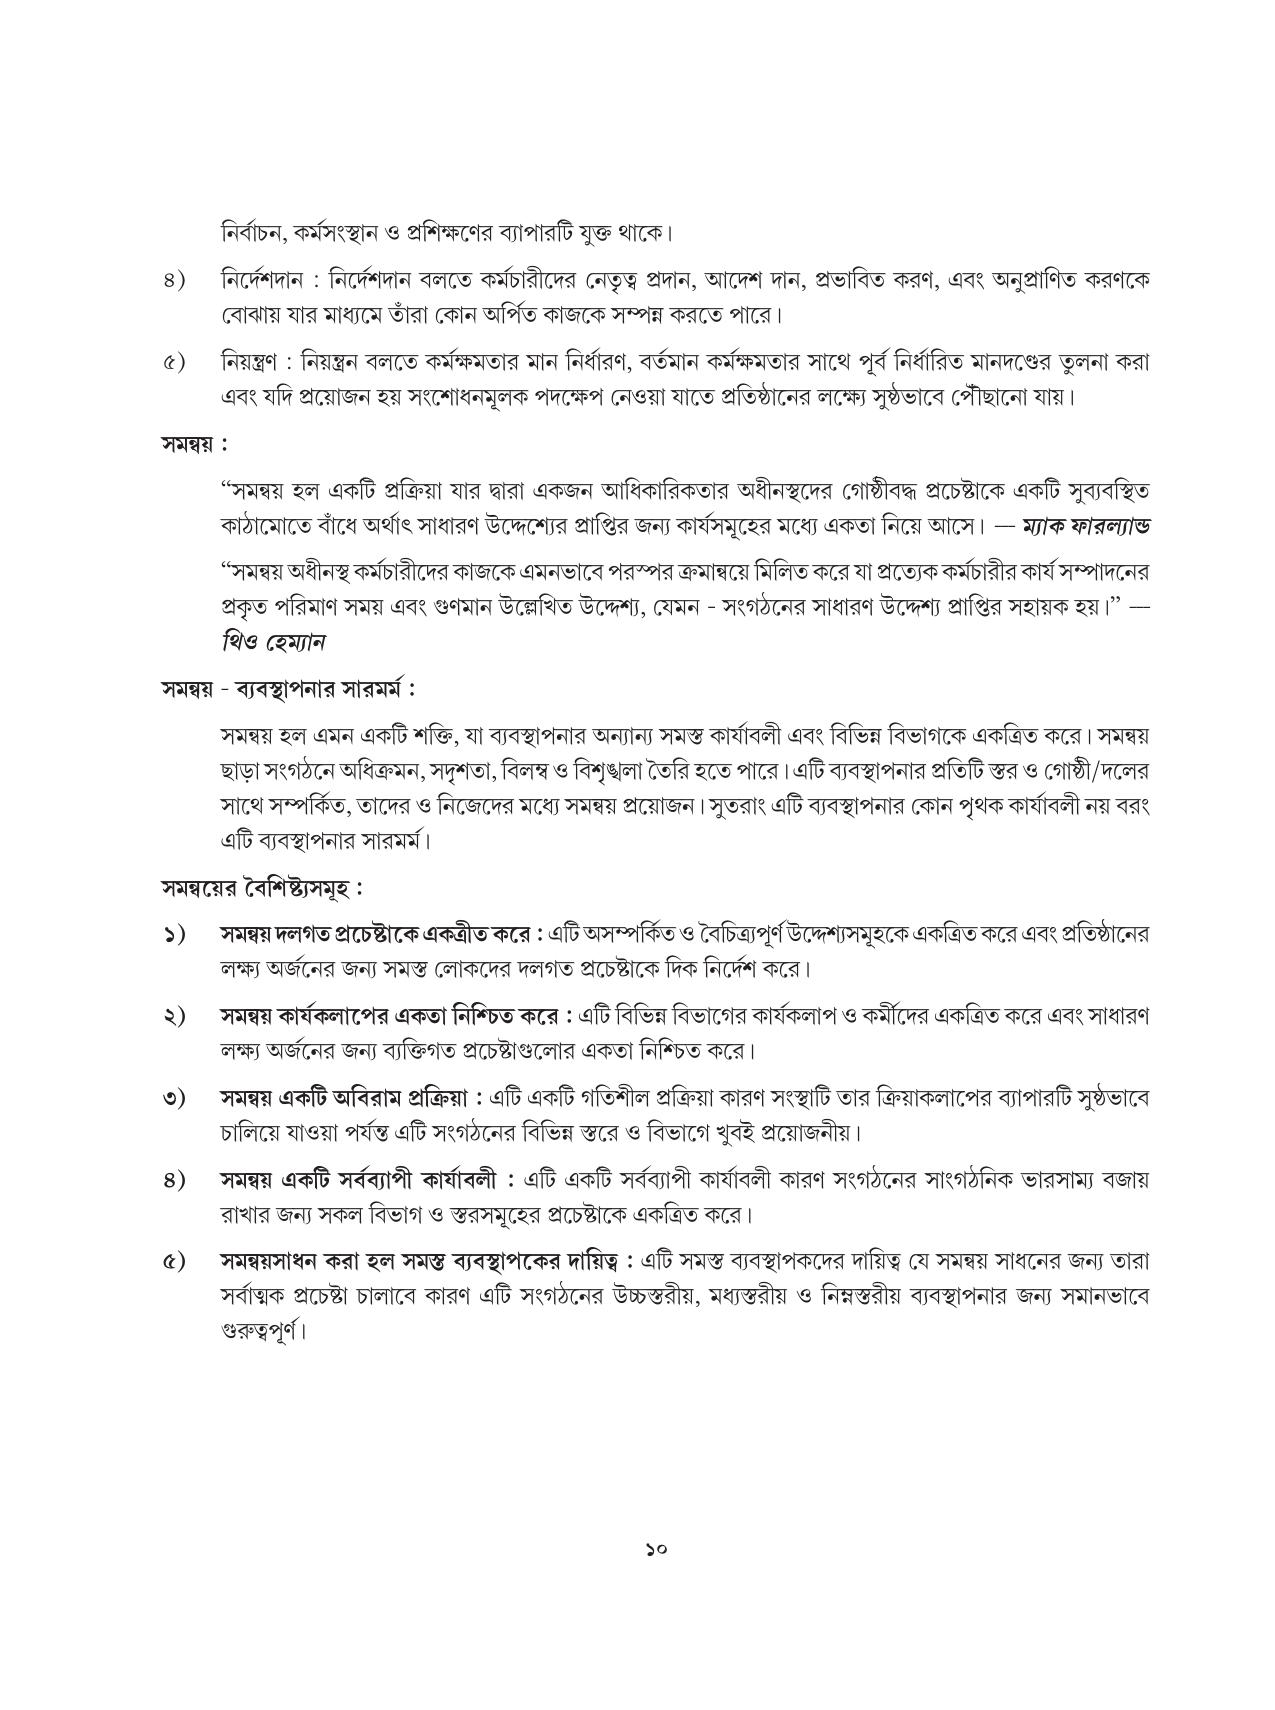 Tripura Board Class 12 Karbari Shastra Bengali Version Workbooks - Page 10